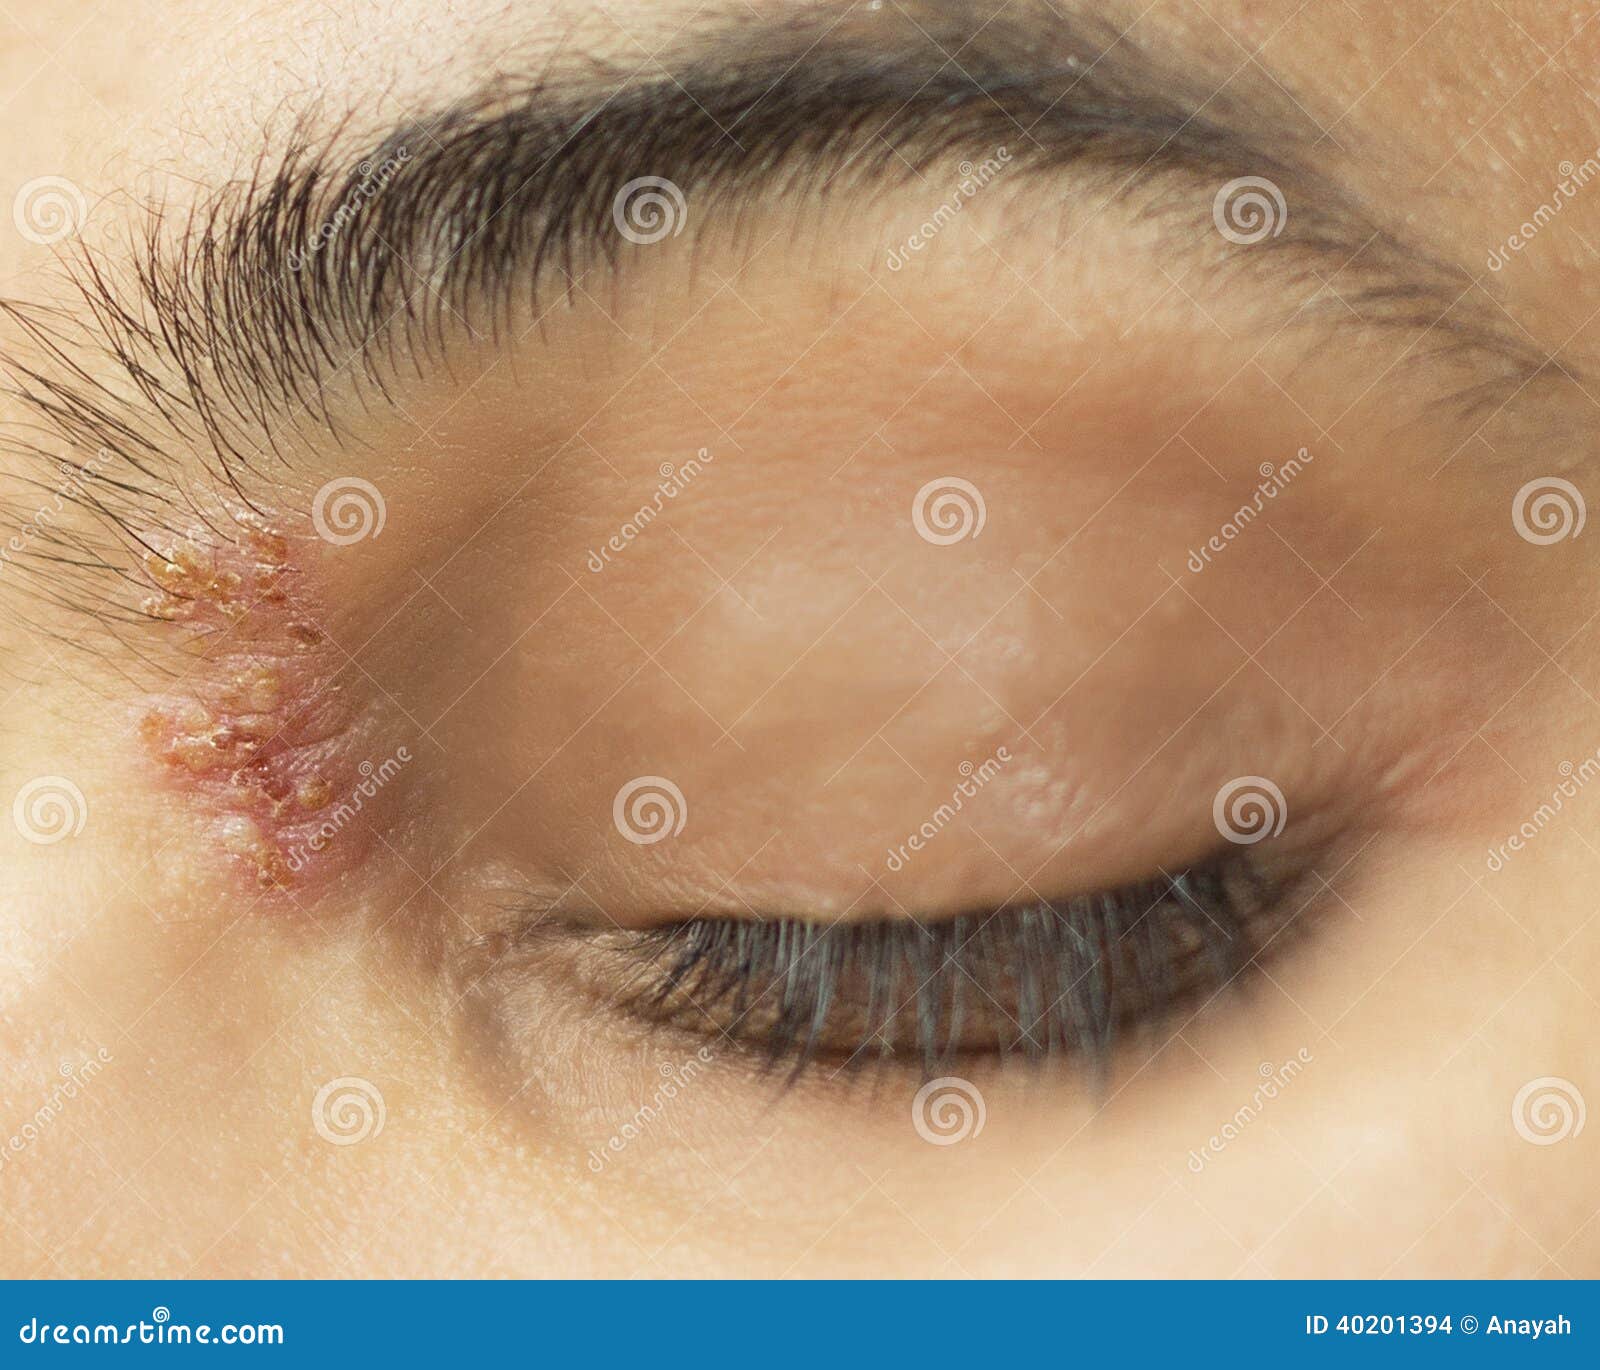 herpetic eye disease - herpes zoster ophthalmicus